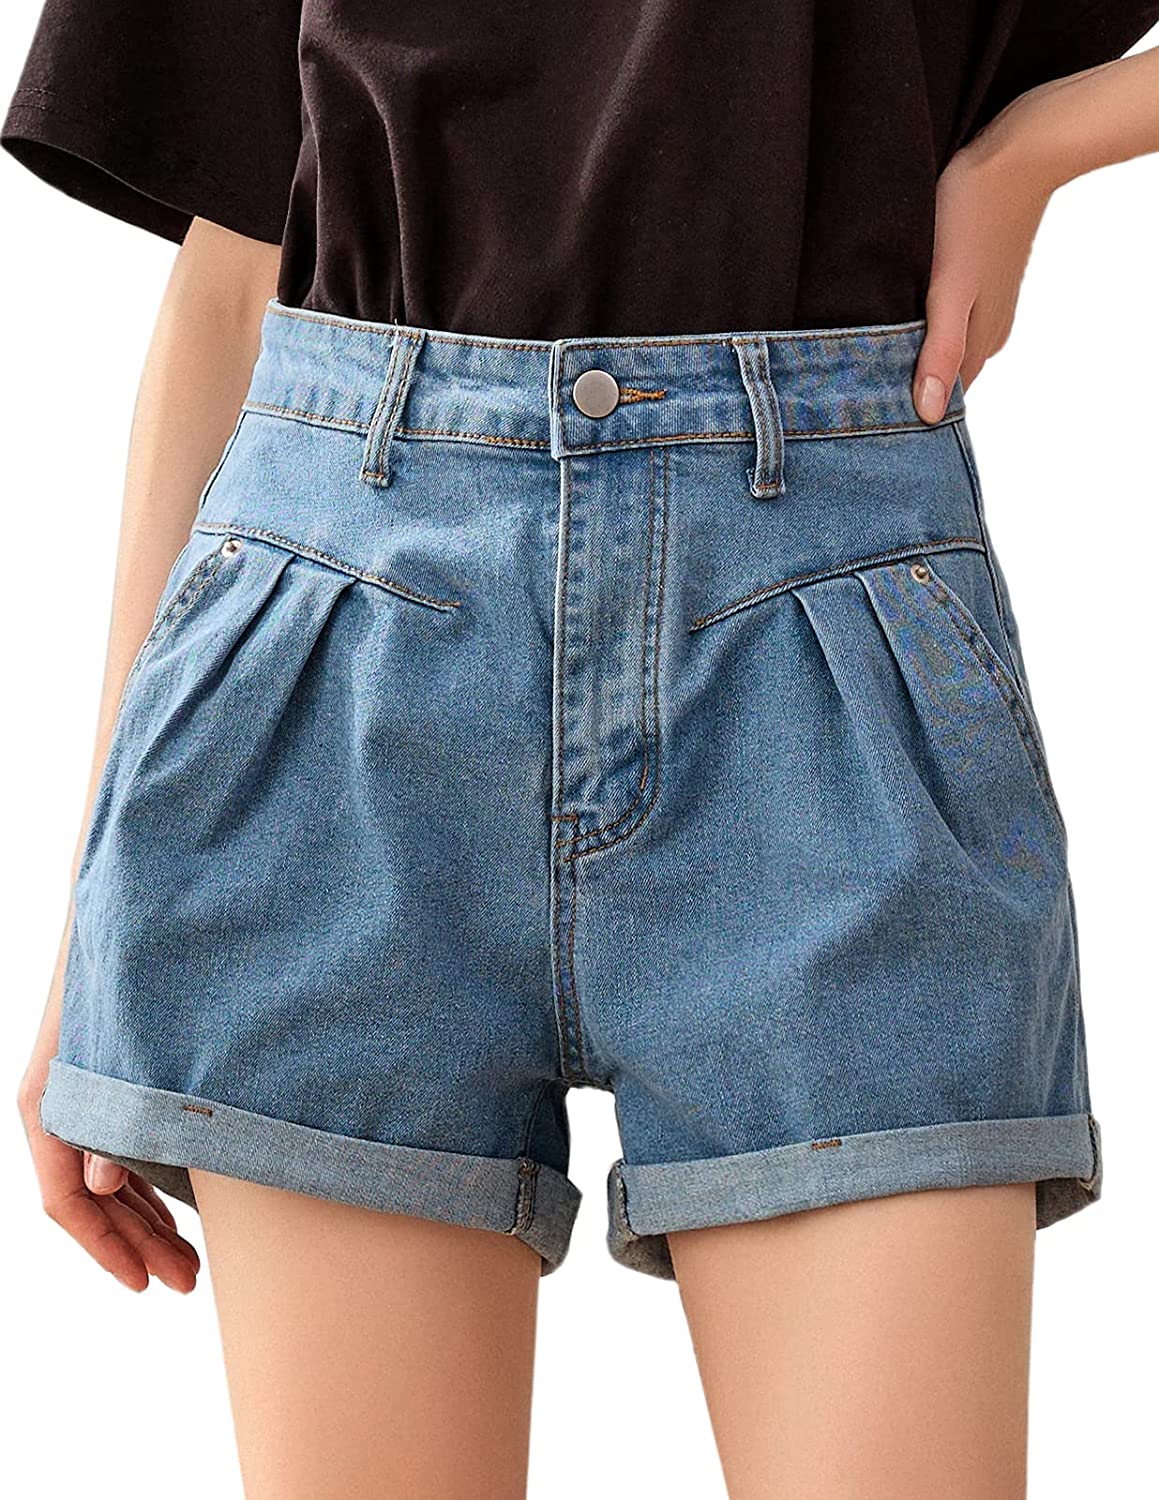 Buy JASAMBAC Women's High Waisted Denim Shorts Rolled Hem Wide Leg Casual  Jean Shorts with Pockets, Black, Medium at